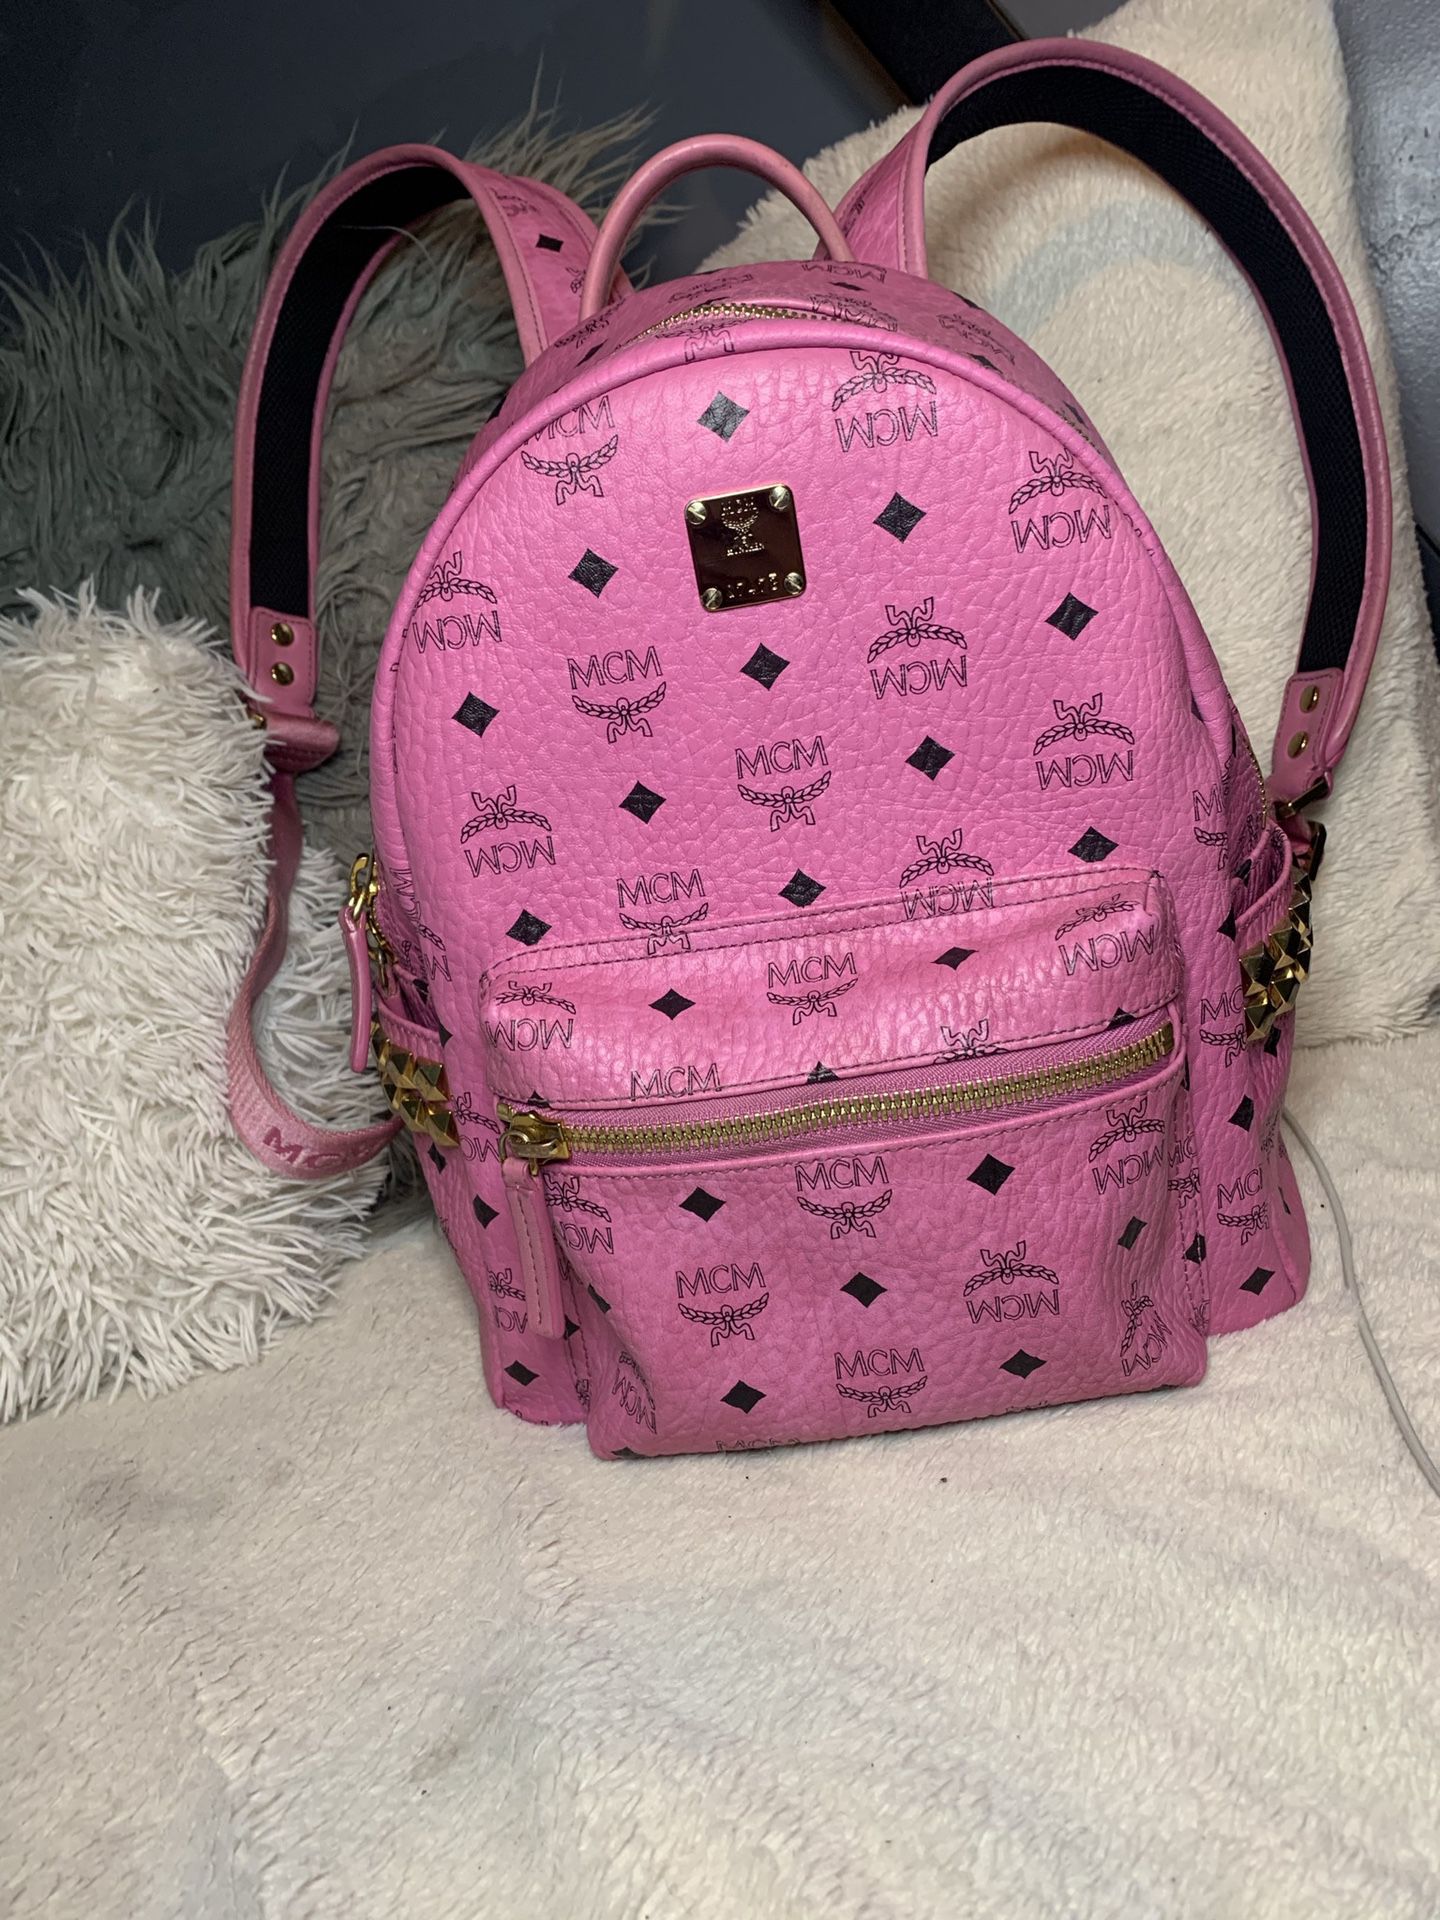 MCM Pink Backpack for Sale in Murrieta, CA - OfferUp